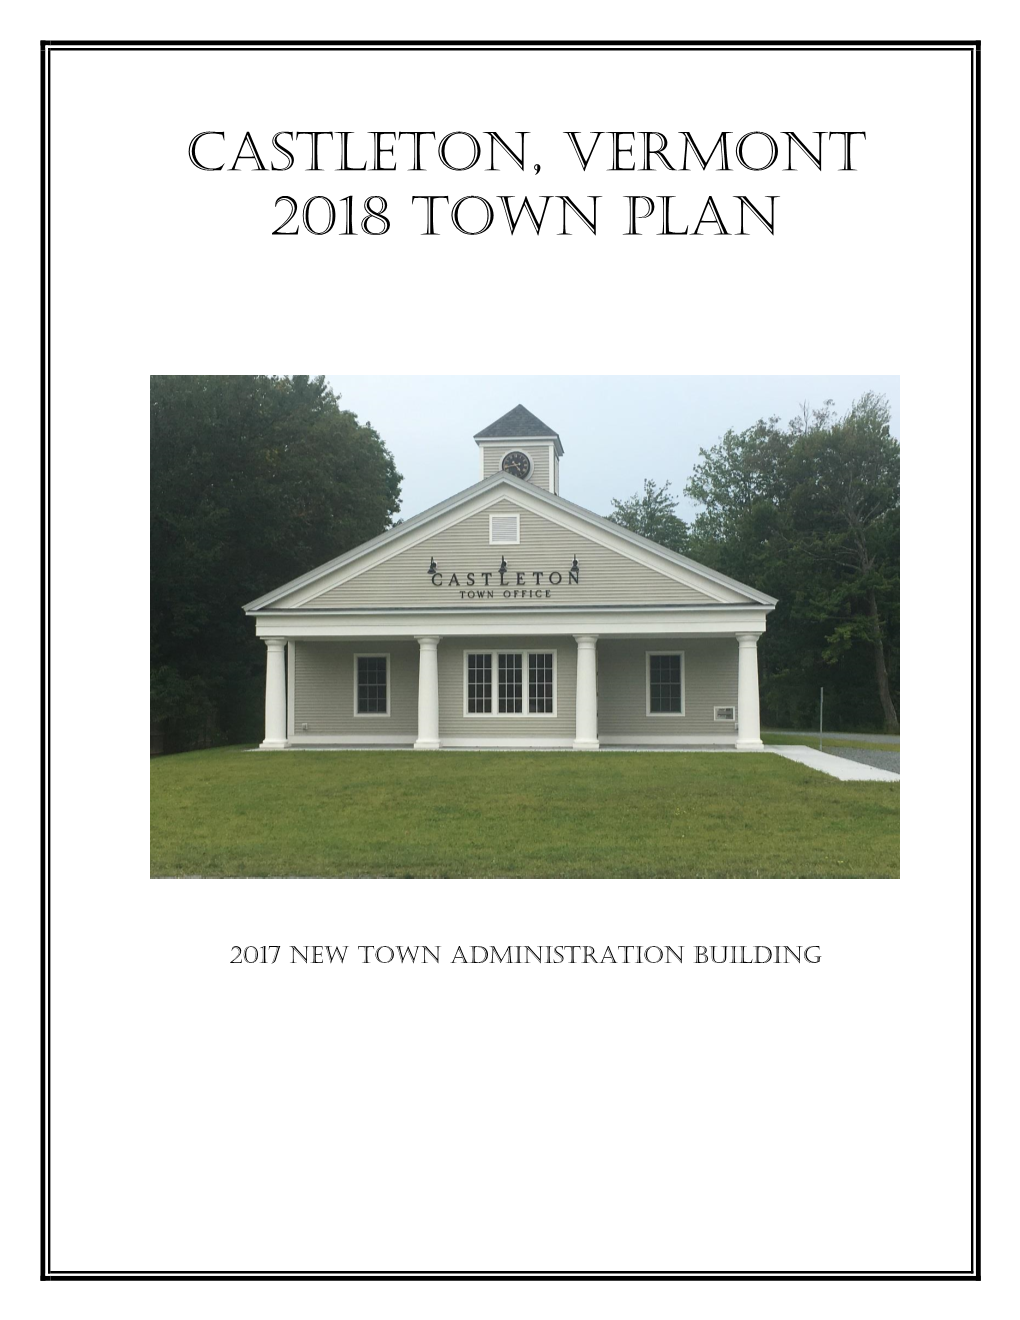 Castleton, Vermont 2018 Town Plan